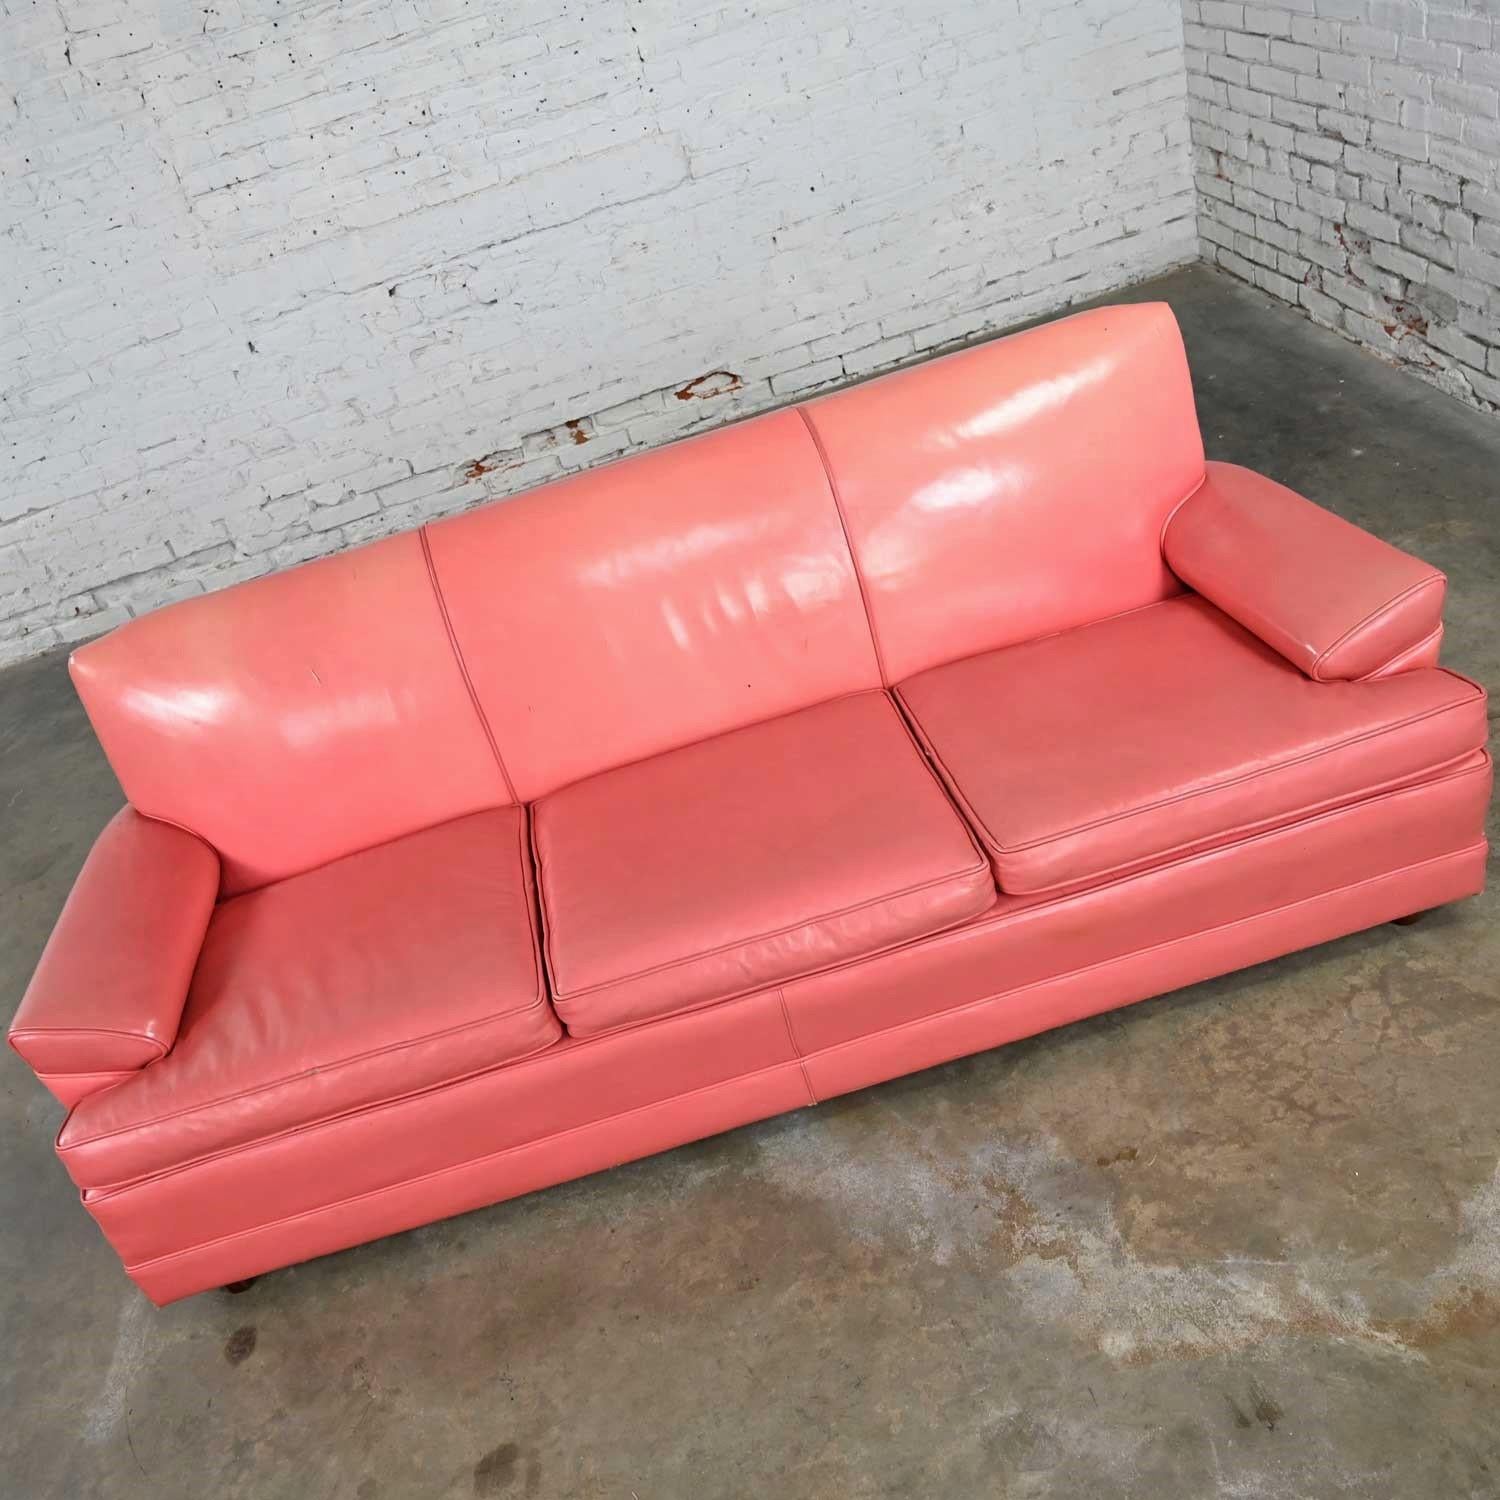 Vintage Hollywood Regency Art Deco Sofa with Original Pink Distressed Leather 4